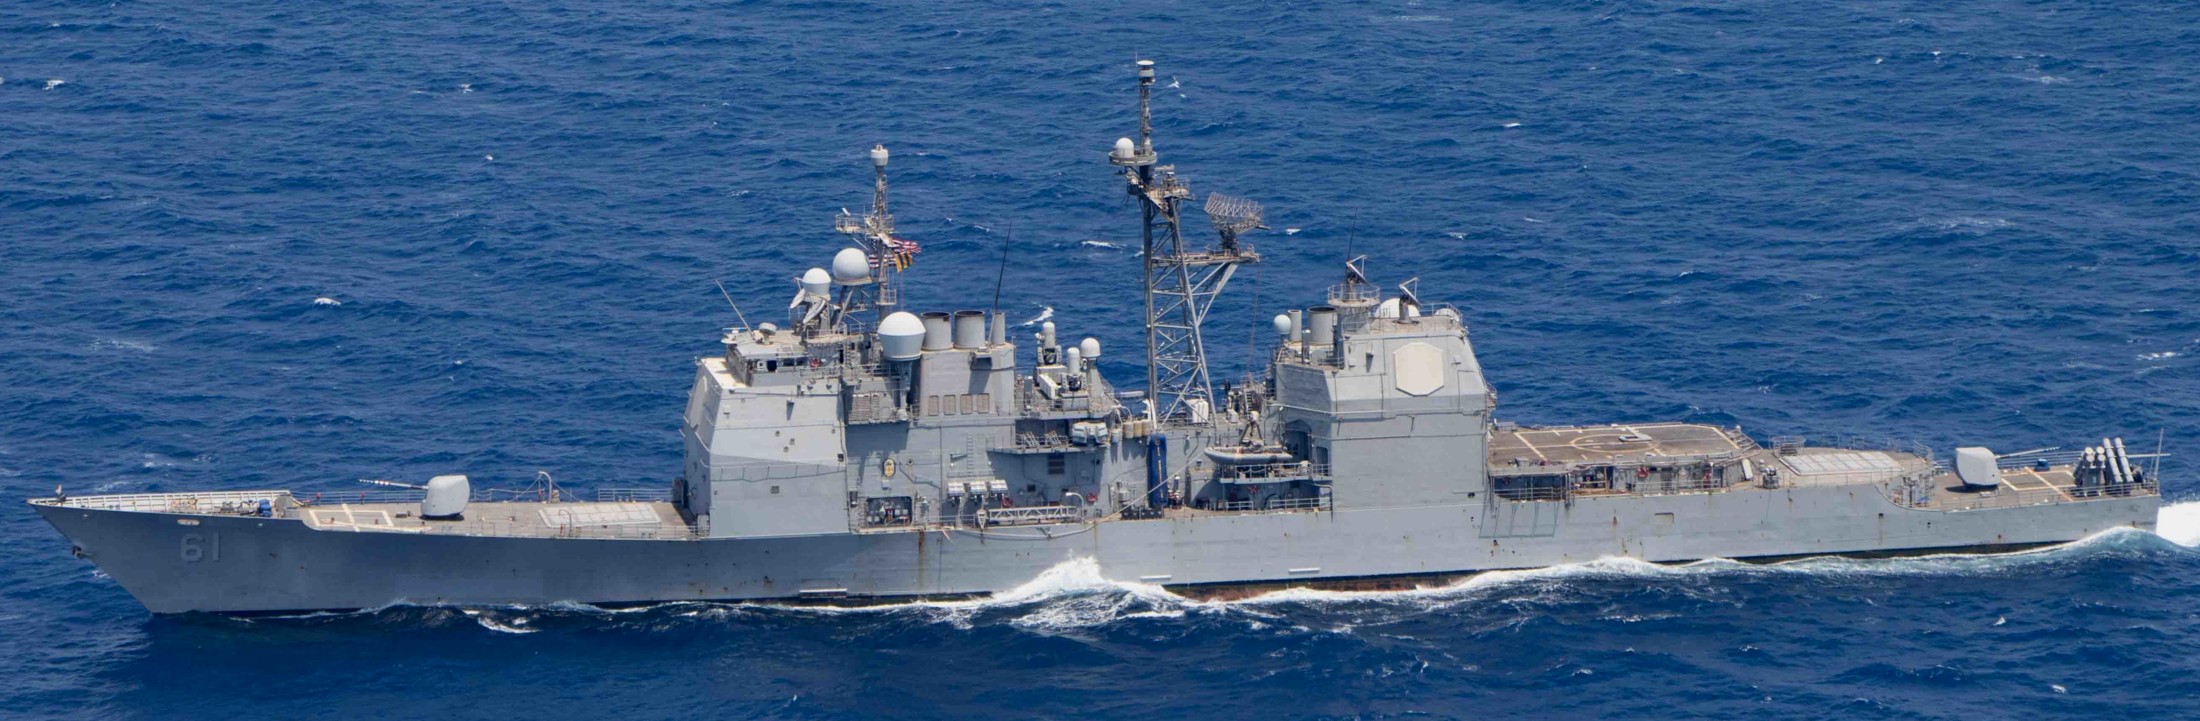 cg-61 uss monterey ticonderoga class guided missile cruiser aegis us navy red sea 122